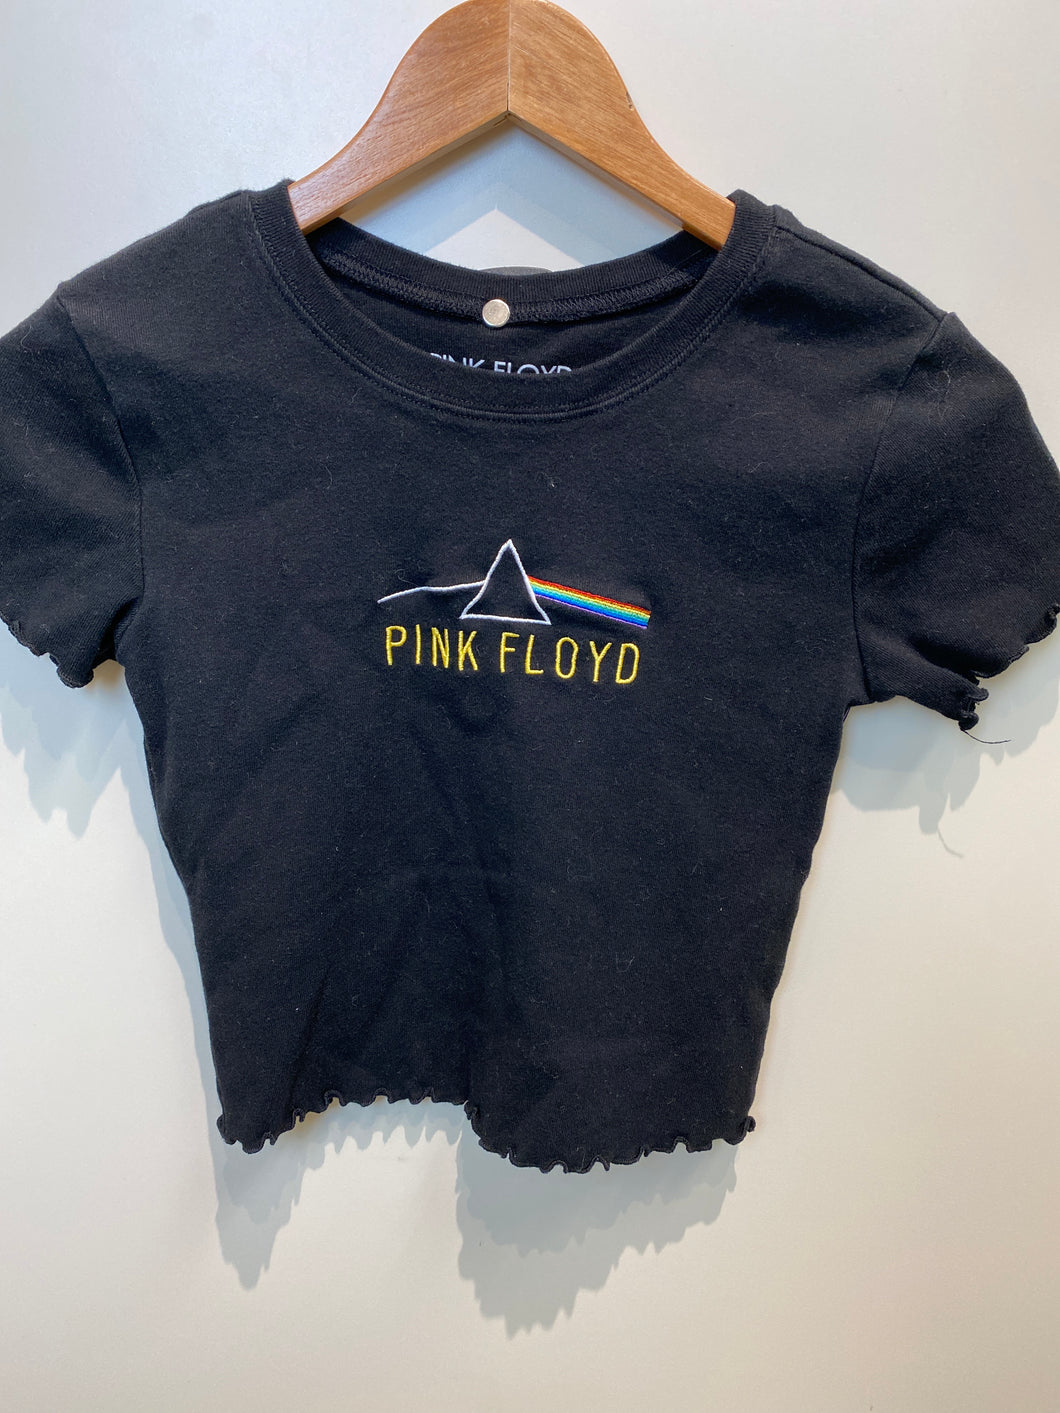 Pink Floyd Womens Short Sleeve Top Size Medium